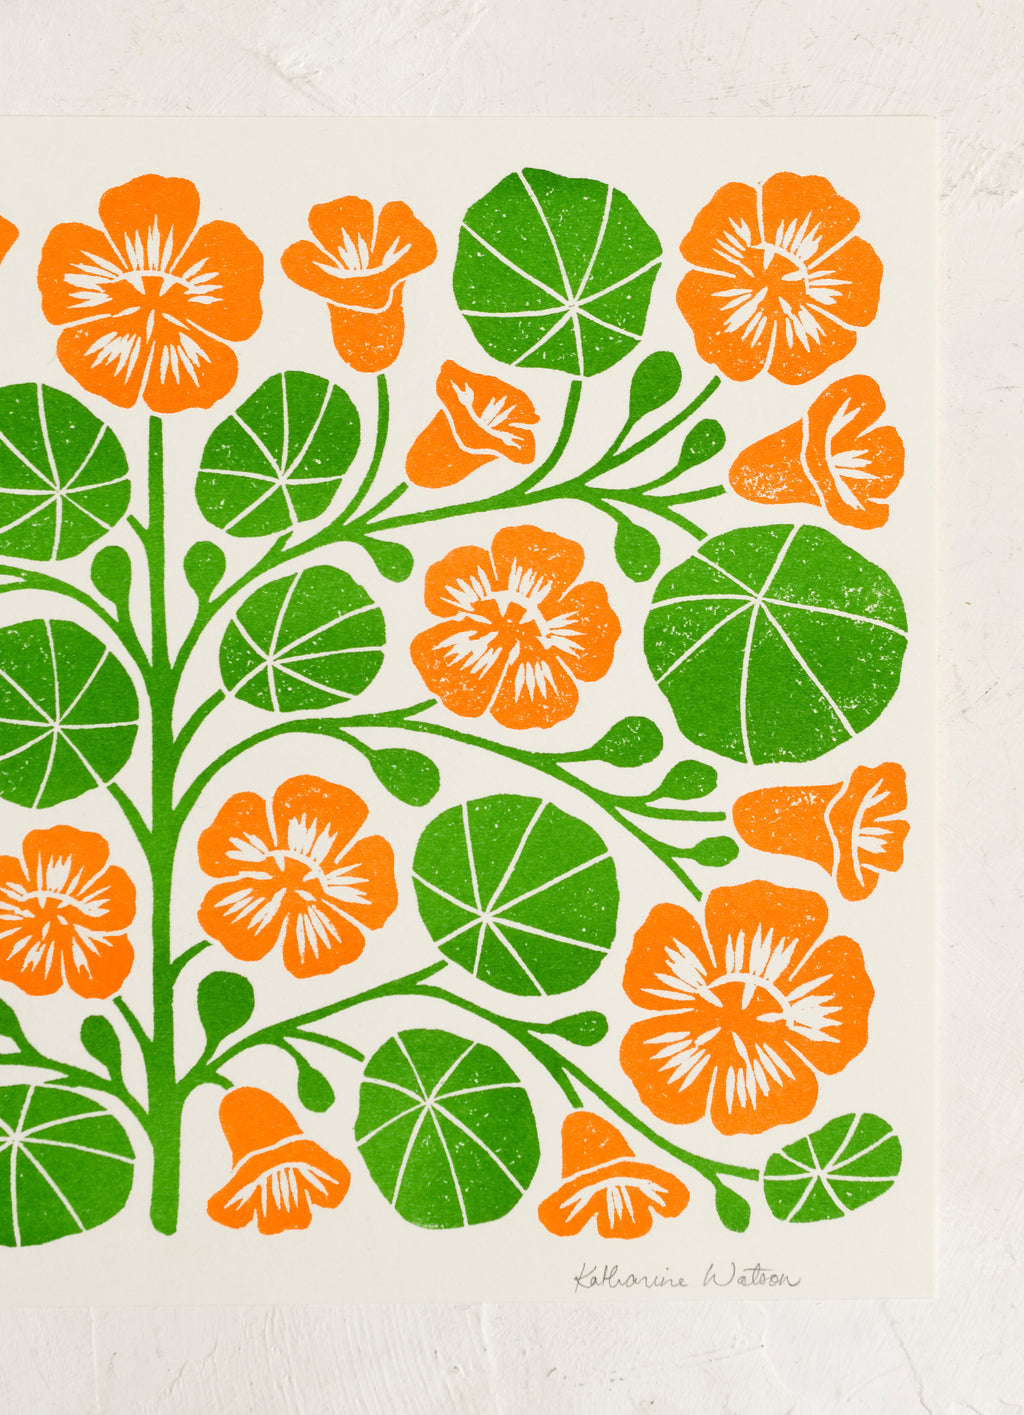 2: A woodblock print of orange nasturtiums.